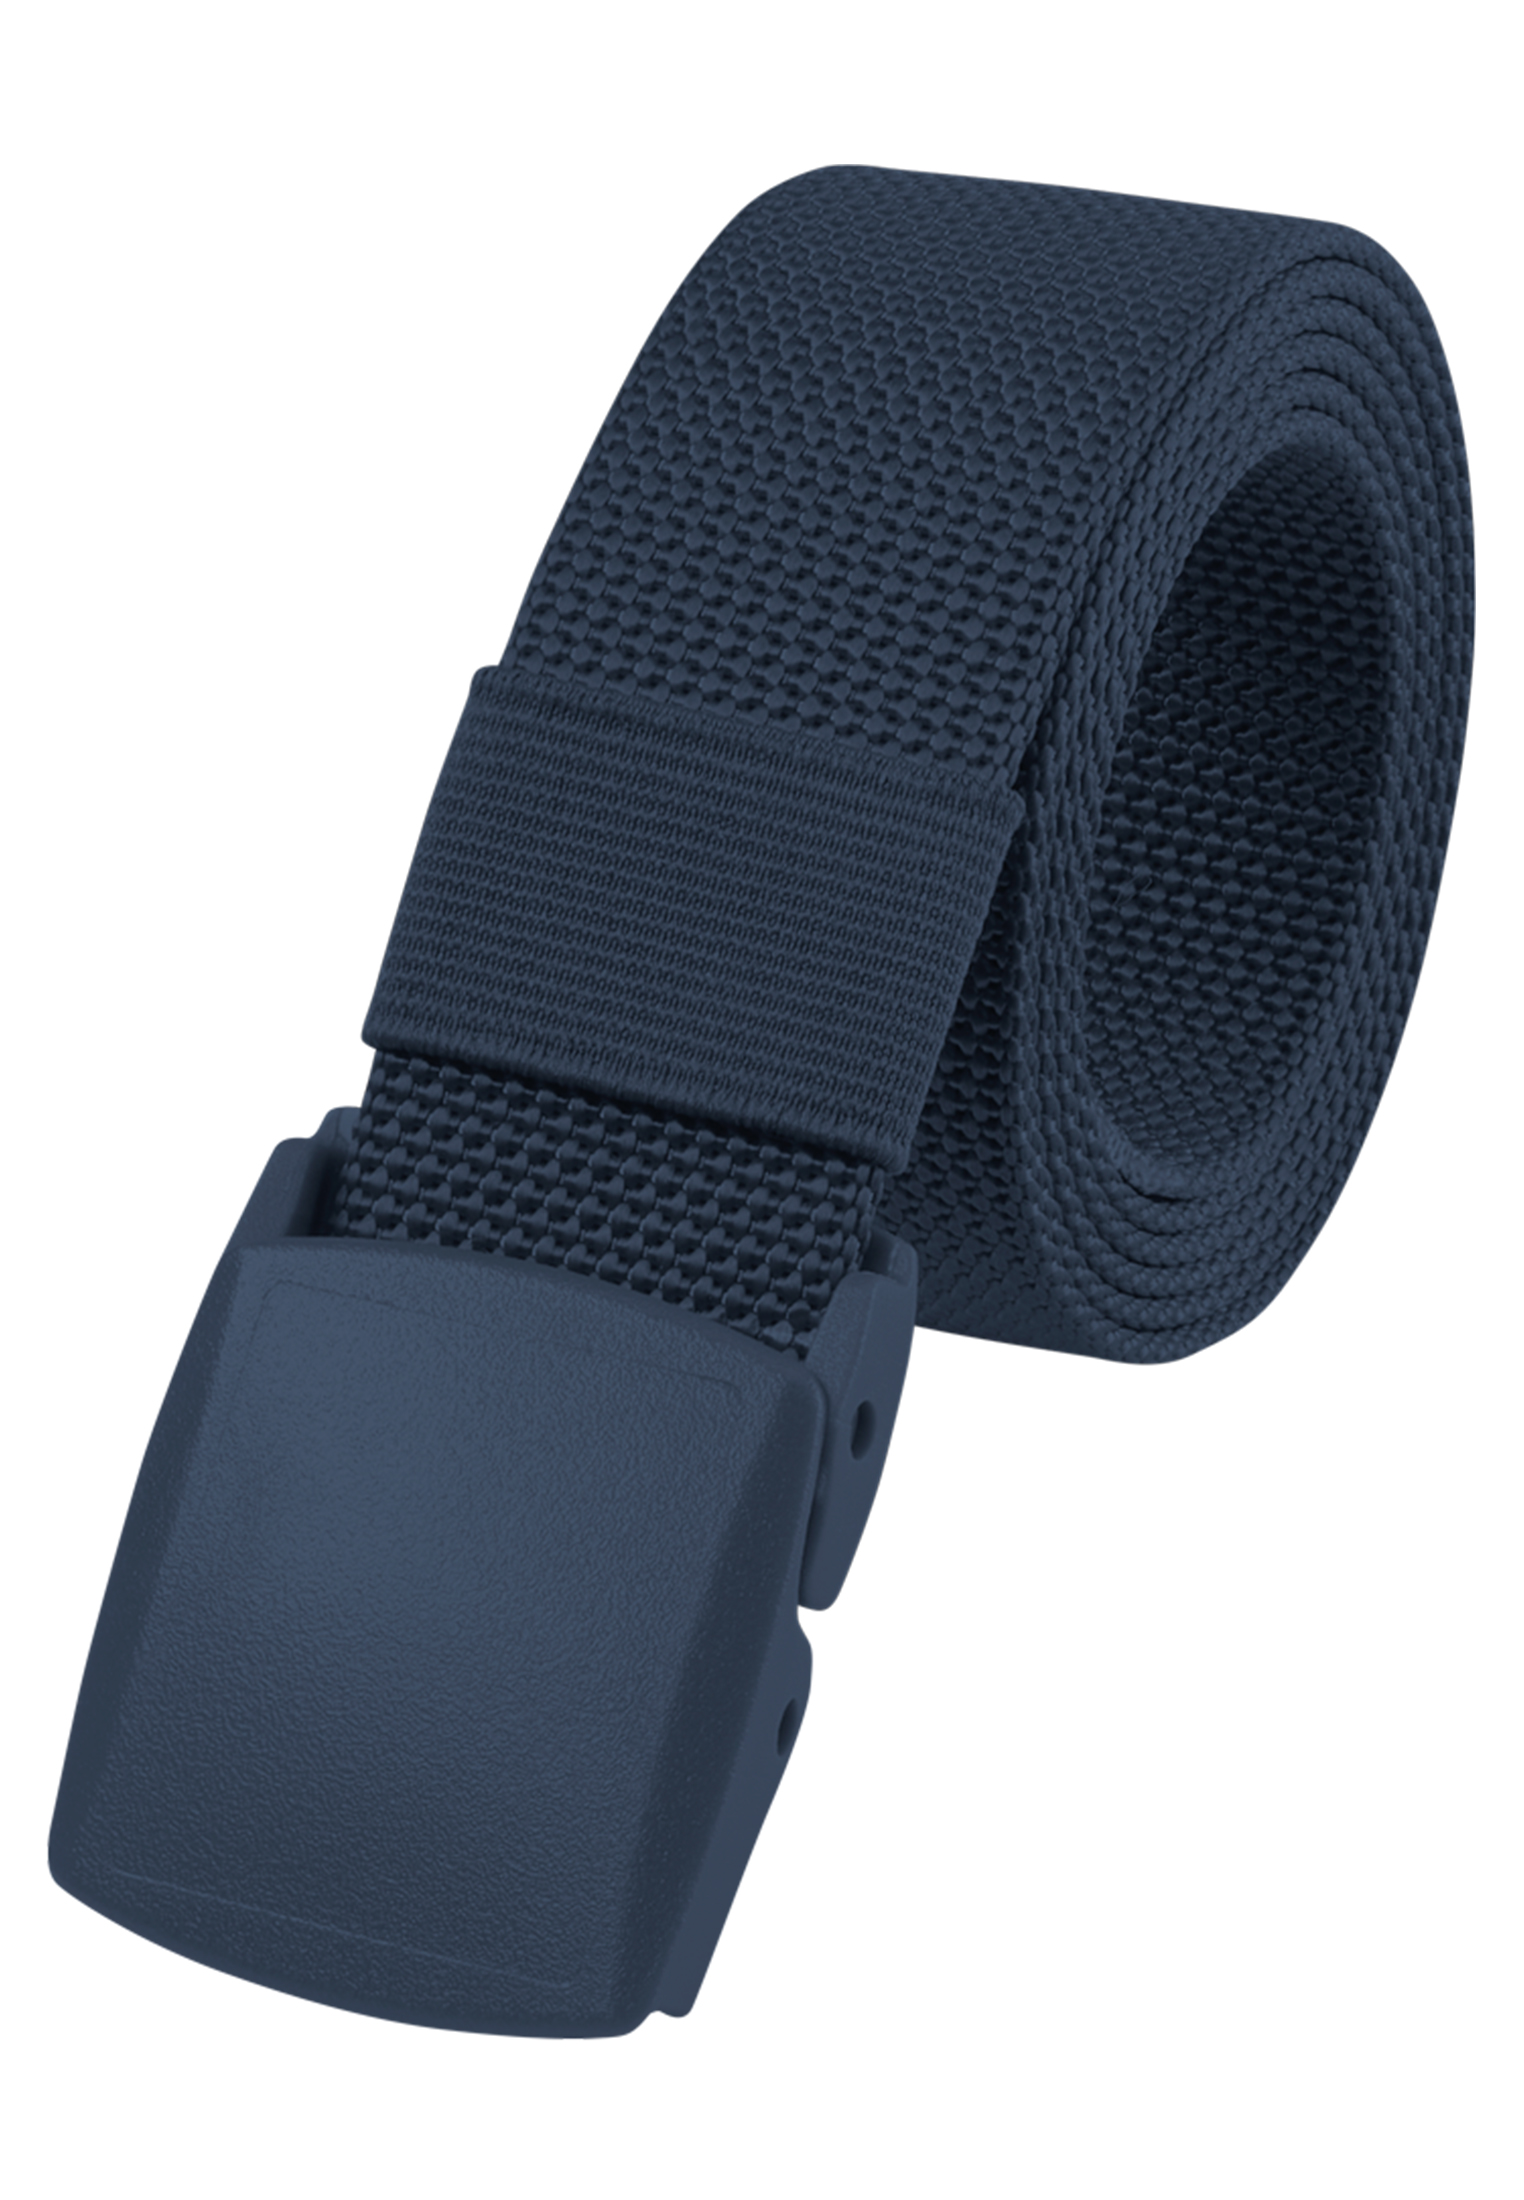 Navy-coloured quick-release belt